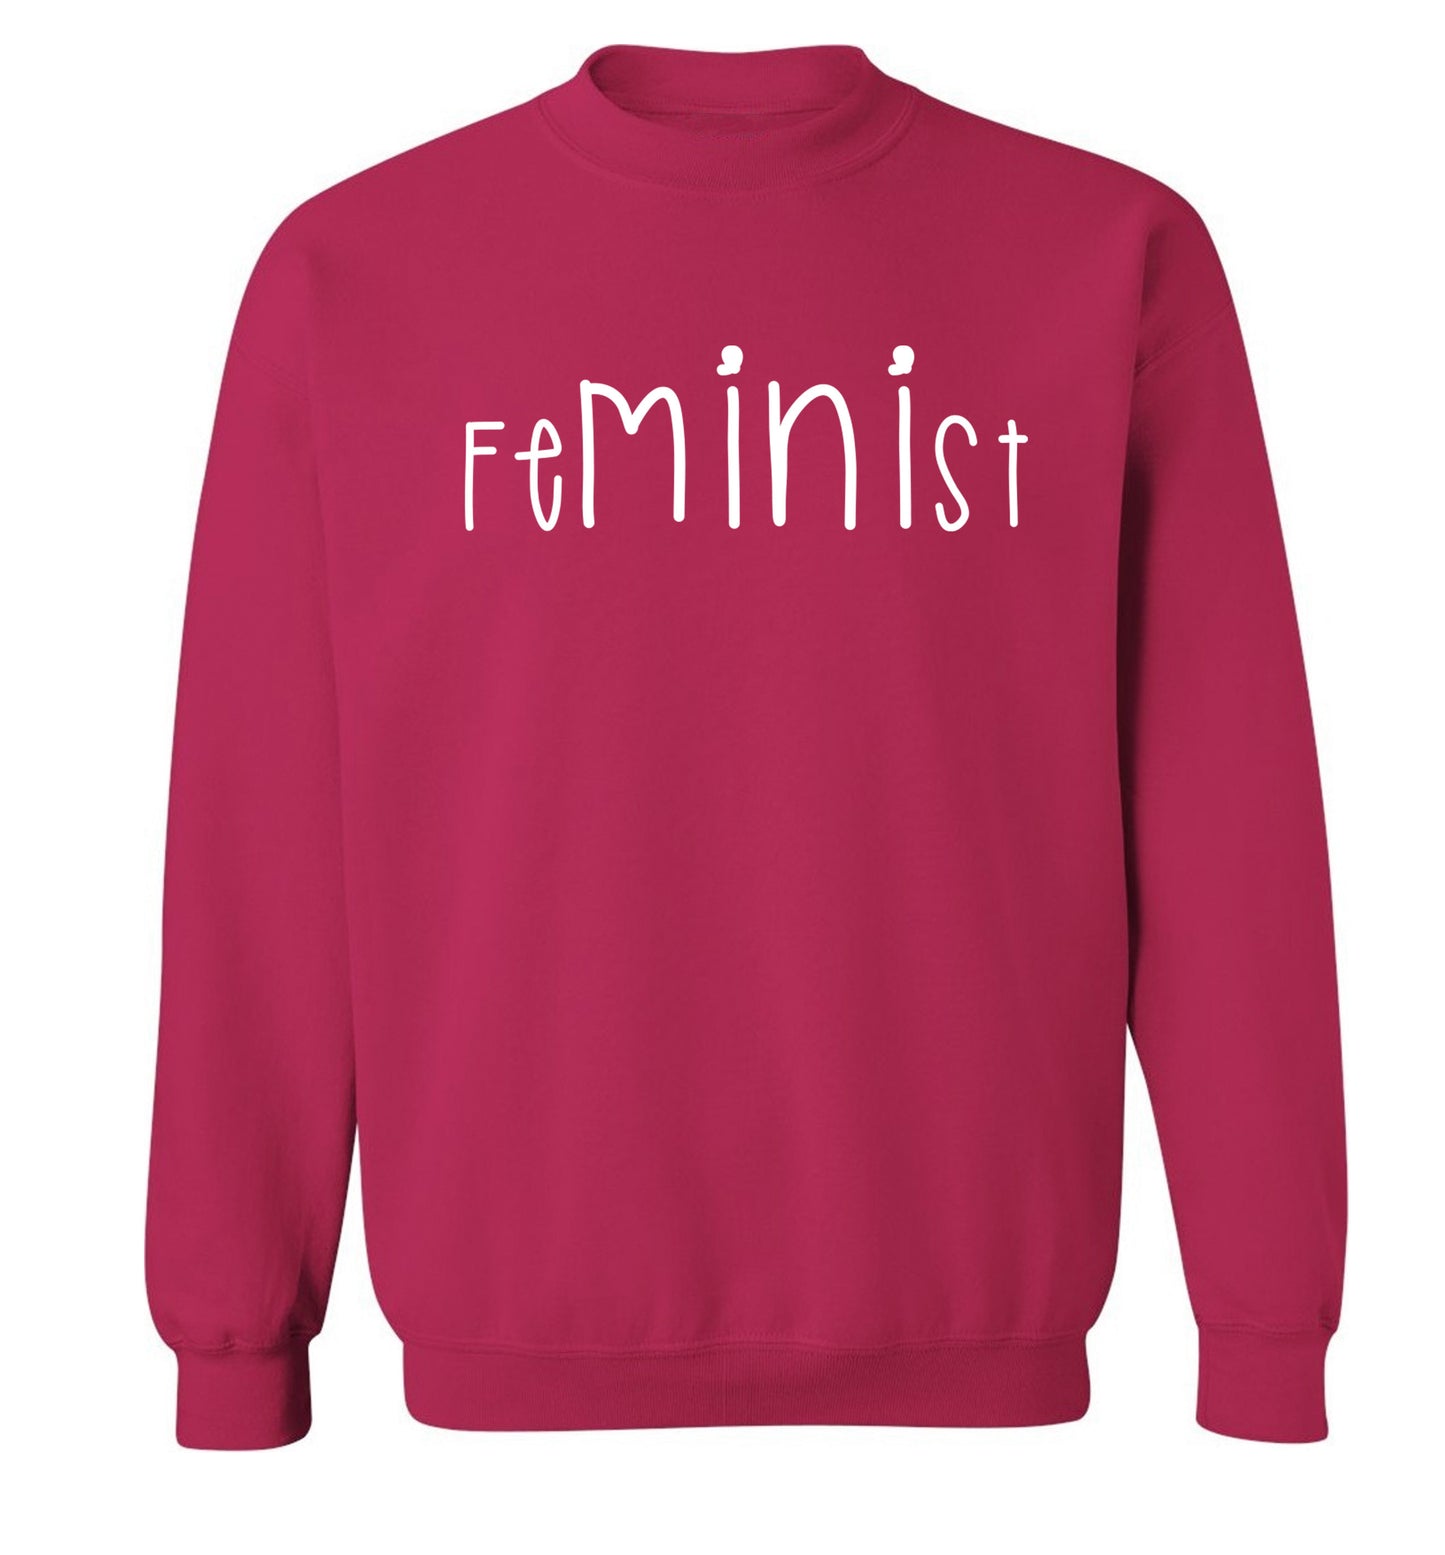 FeMINIst Adult's unisex pink Sweater 2XL